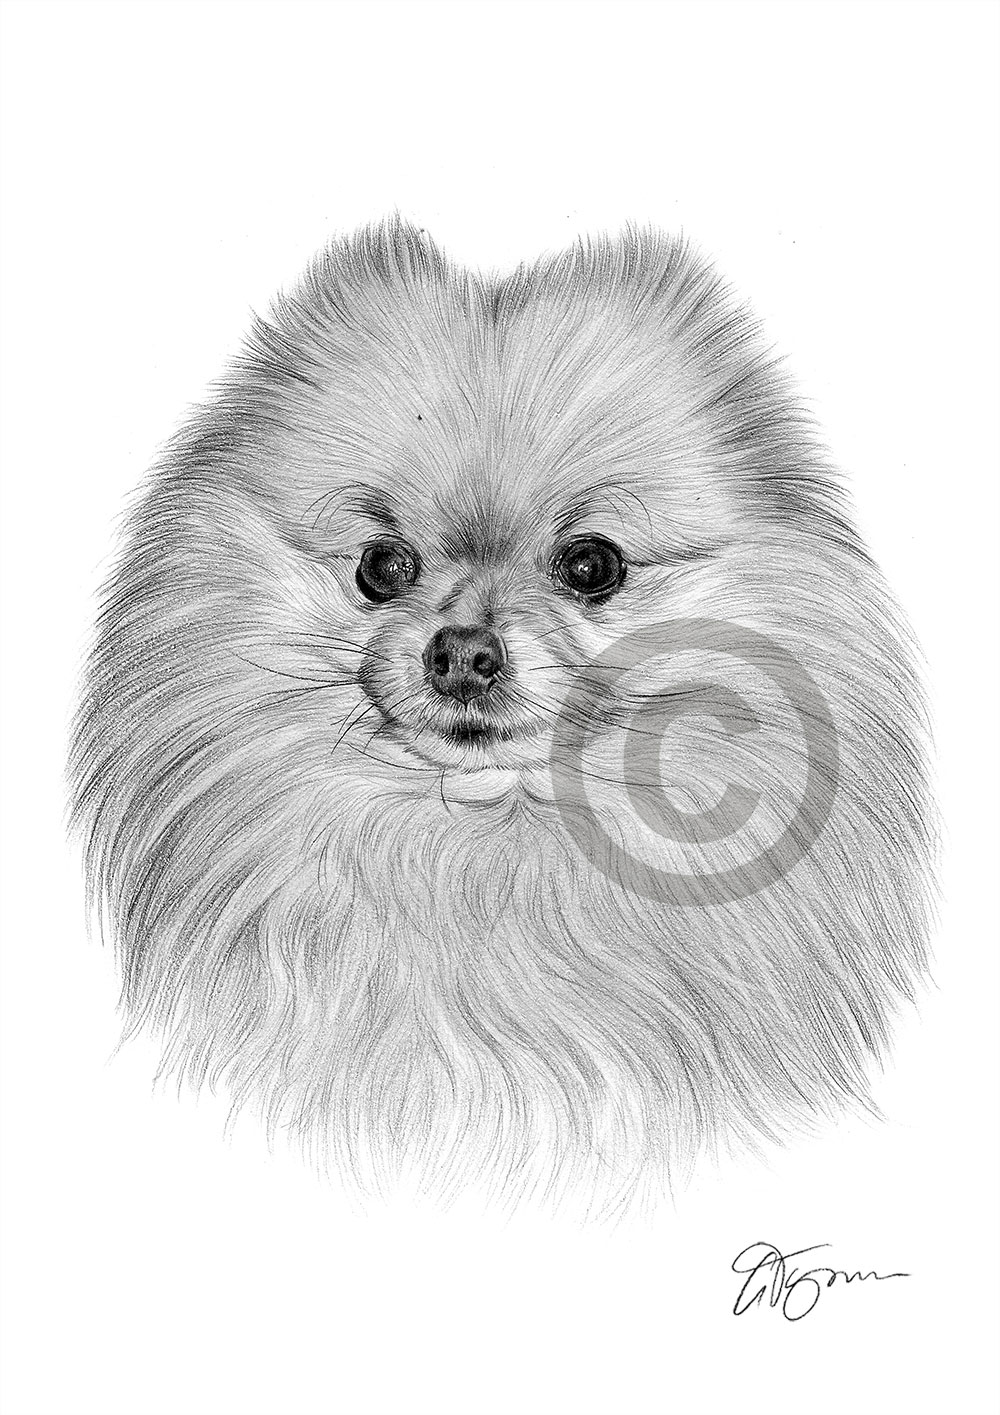 Pencil drawing of a Pomeranian by artist Gary Tymon